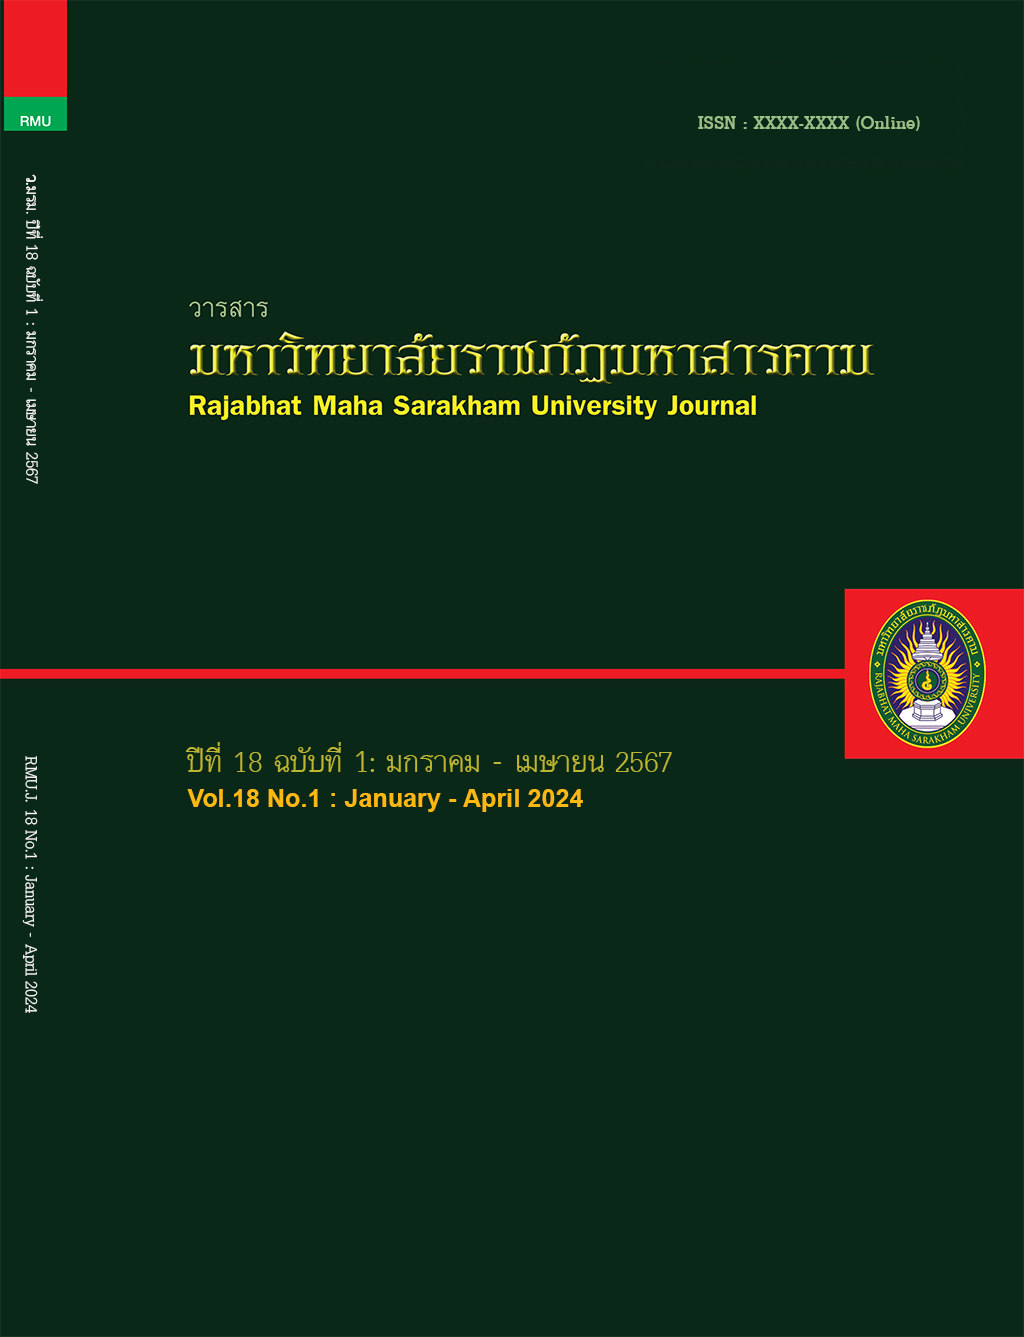 Rajabhat Maha Sarakham University Journal Vol.18 No.1